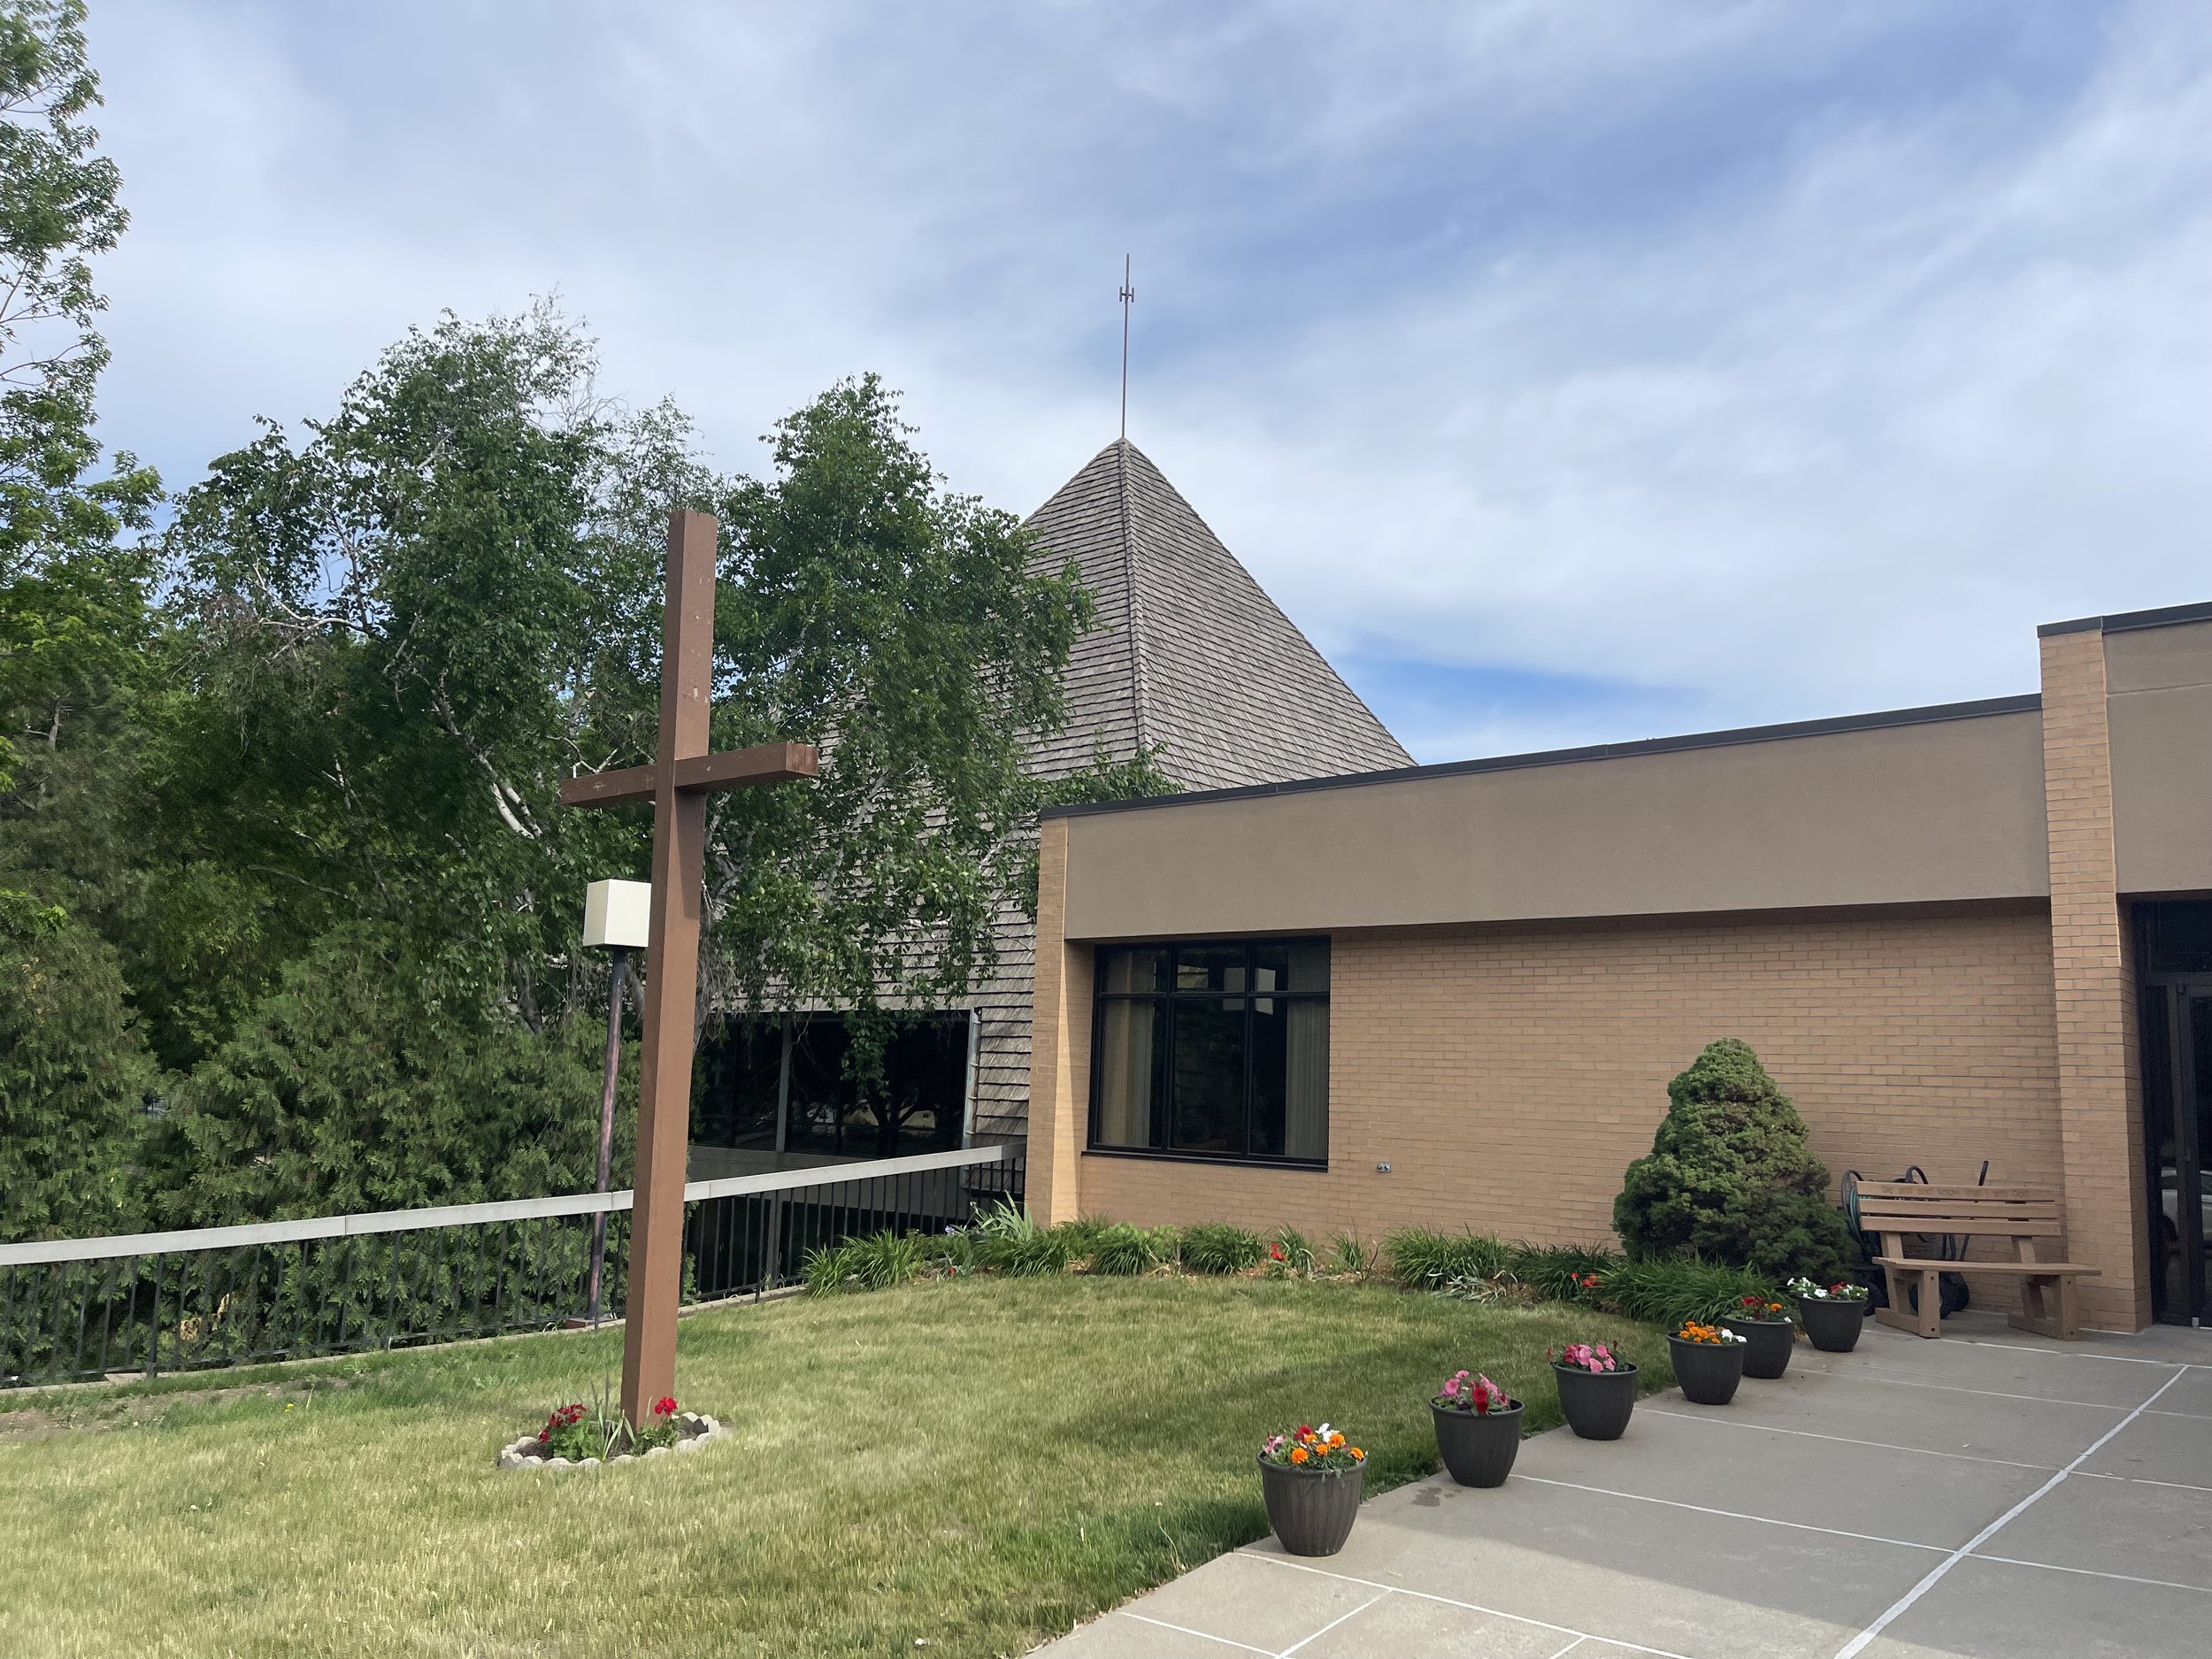 St. Mark's Evangelical Lutheran Church Foundation North Saint Paul,  Minnesota - Home